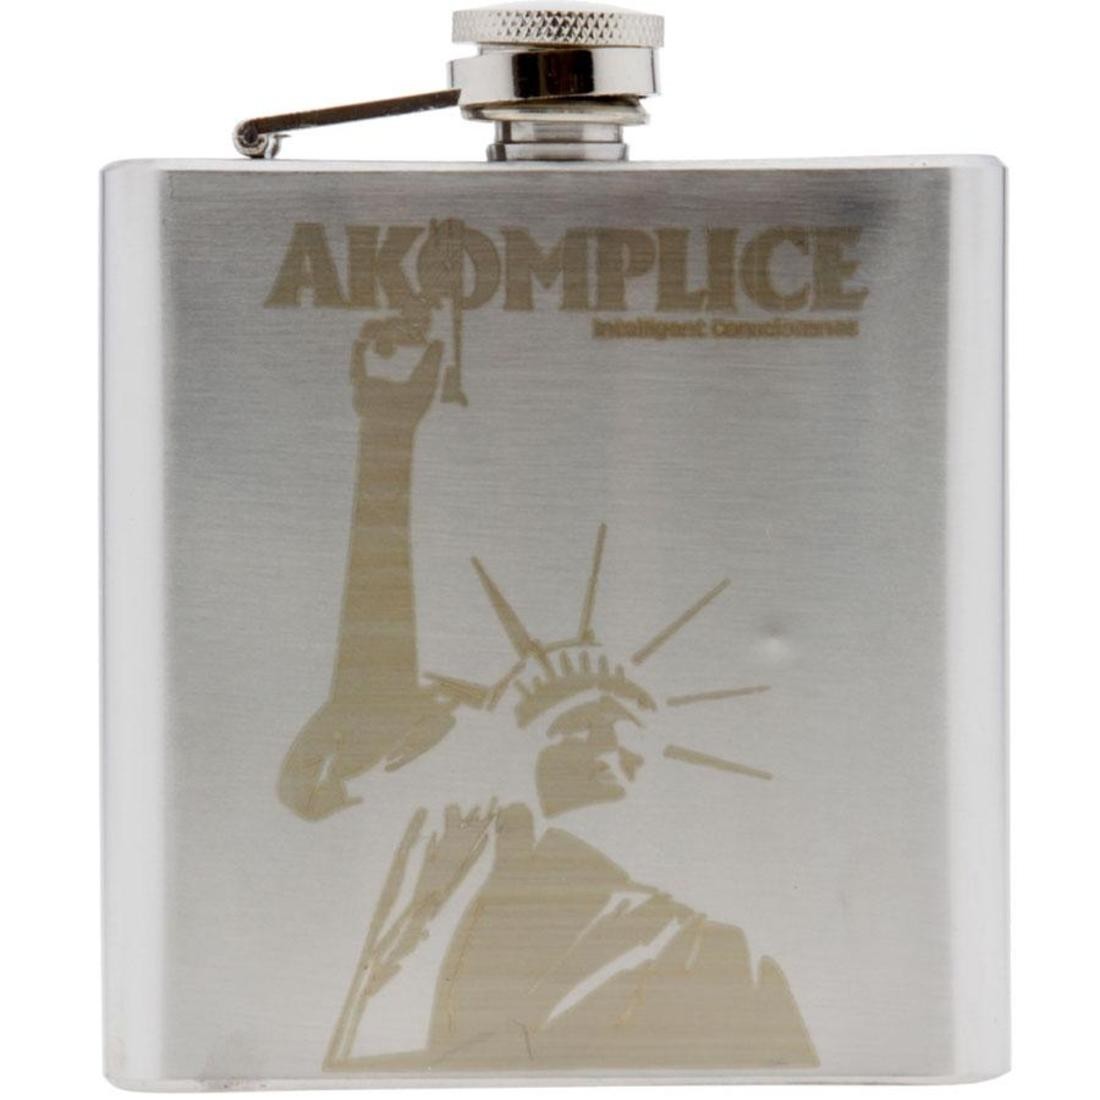 Akomplice Liberty Flask (silver)